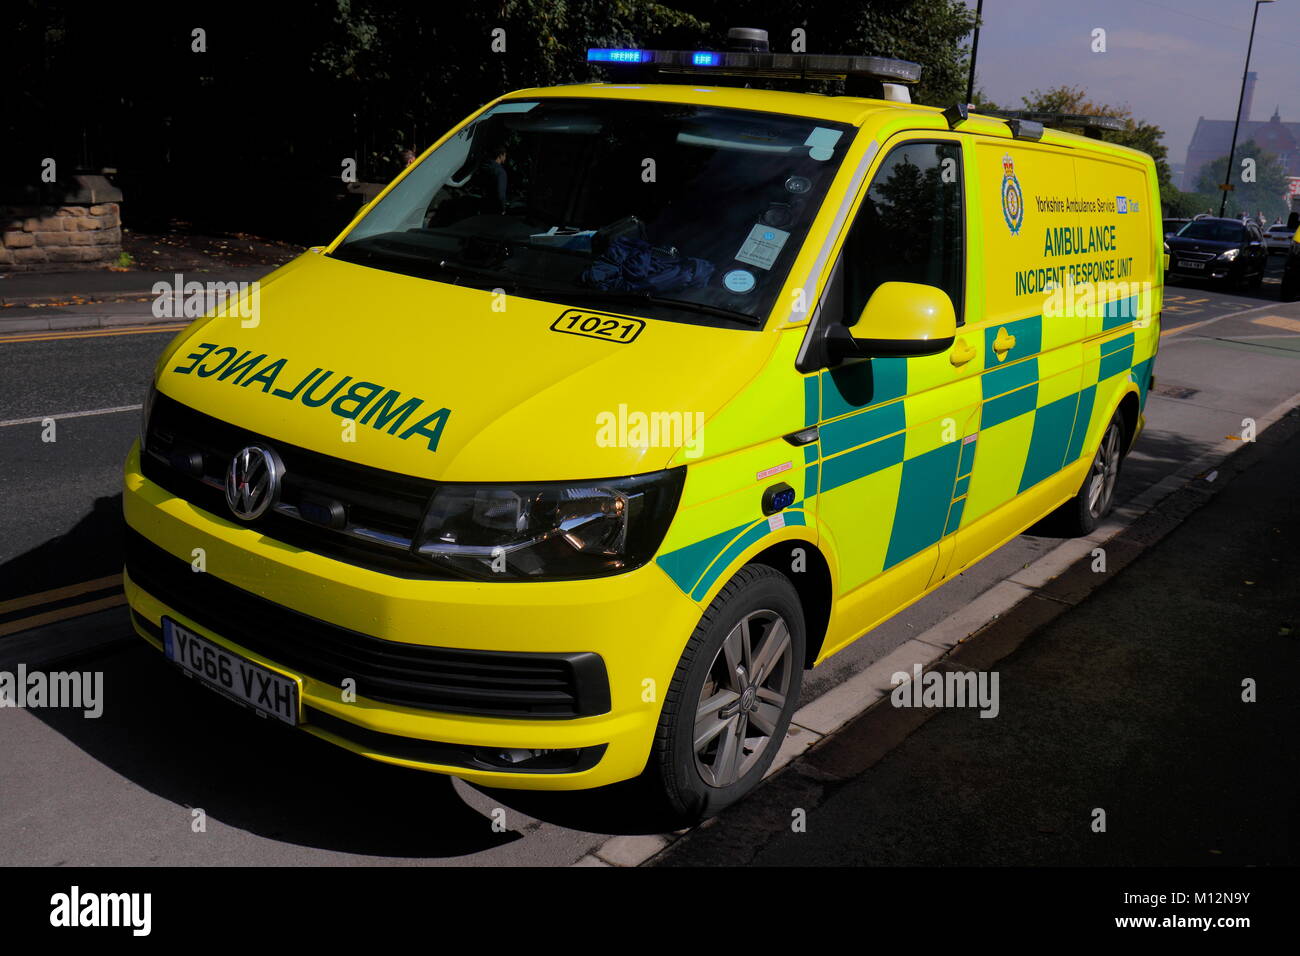 Ambulance Incident Response Unit Stockfoto